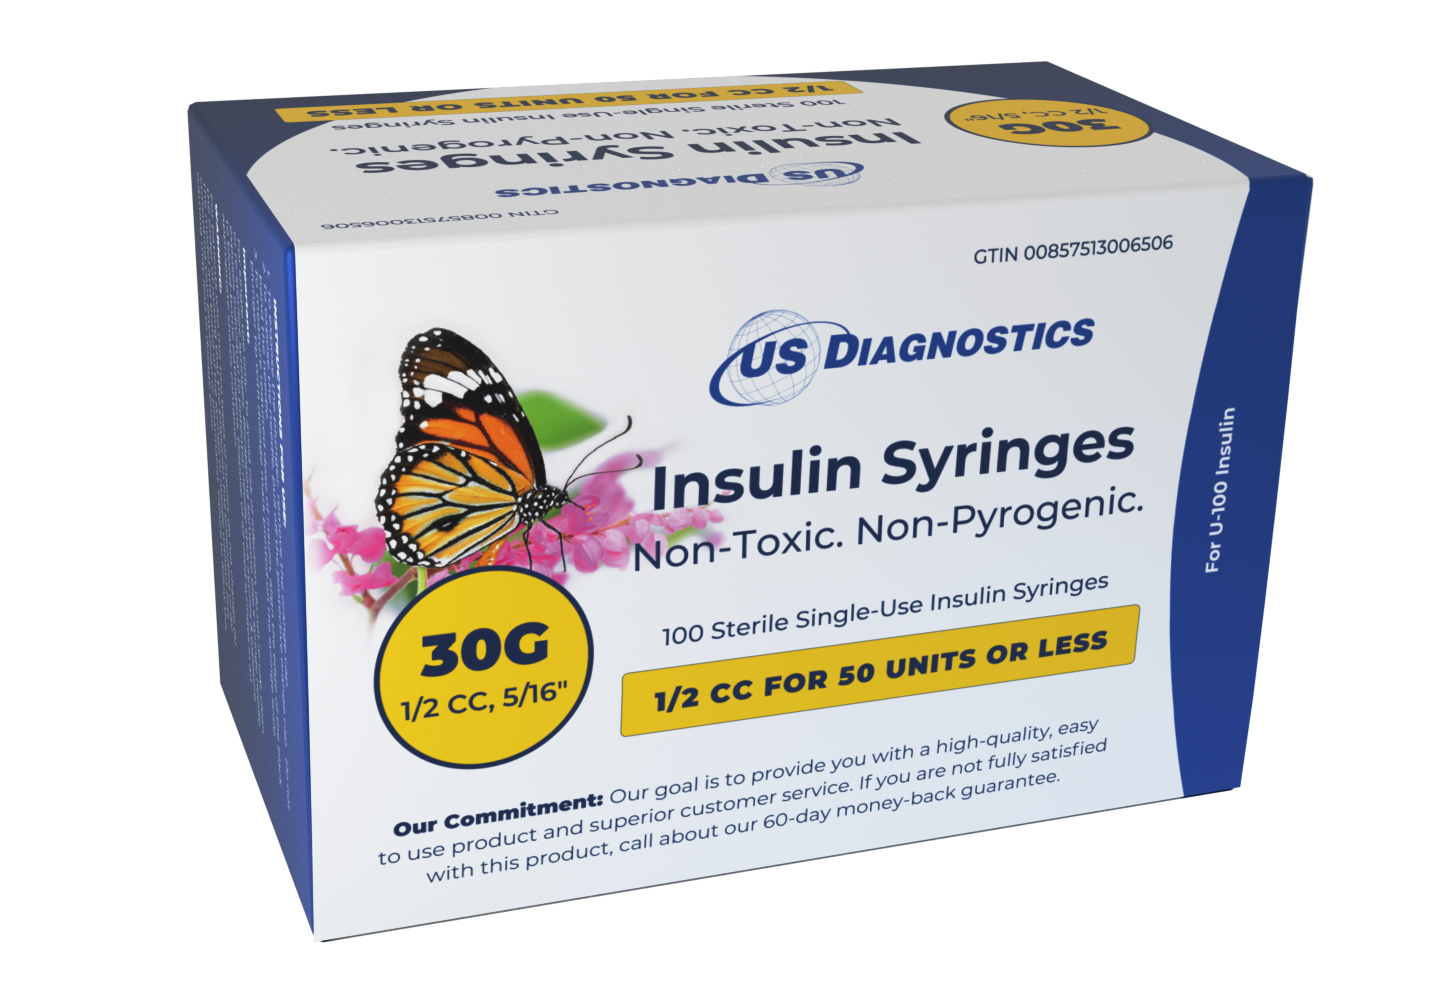 Insulin Syringes 30G, 1/2cc, 5/16", 100/box